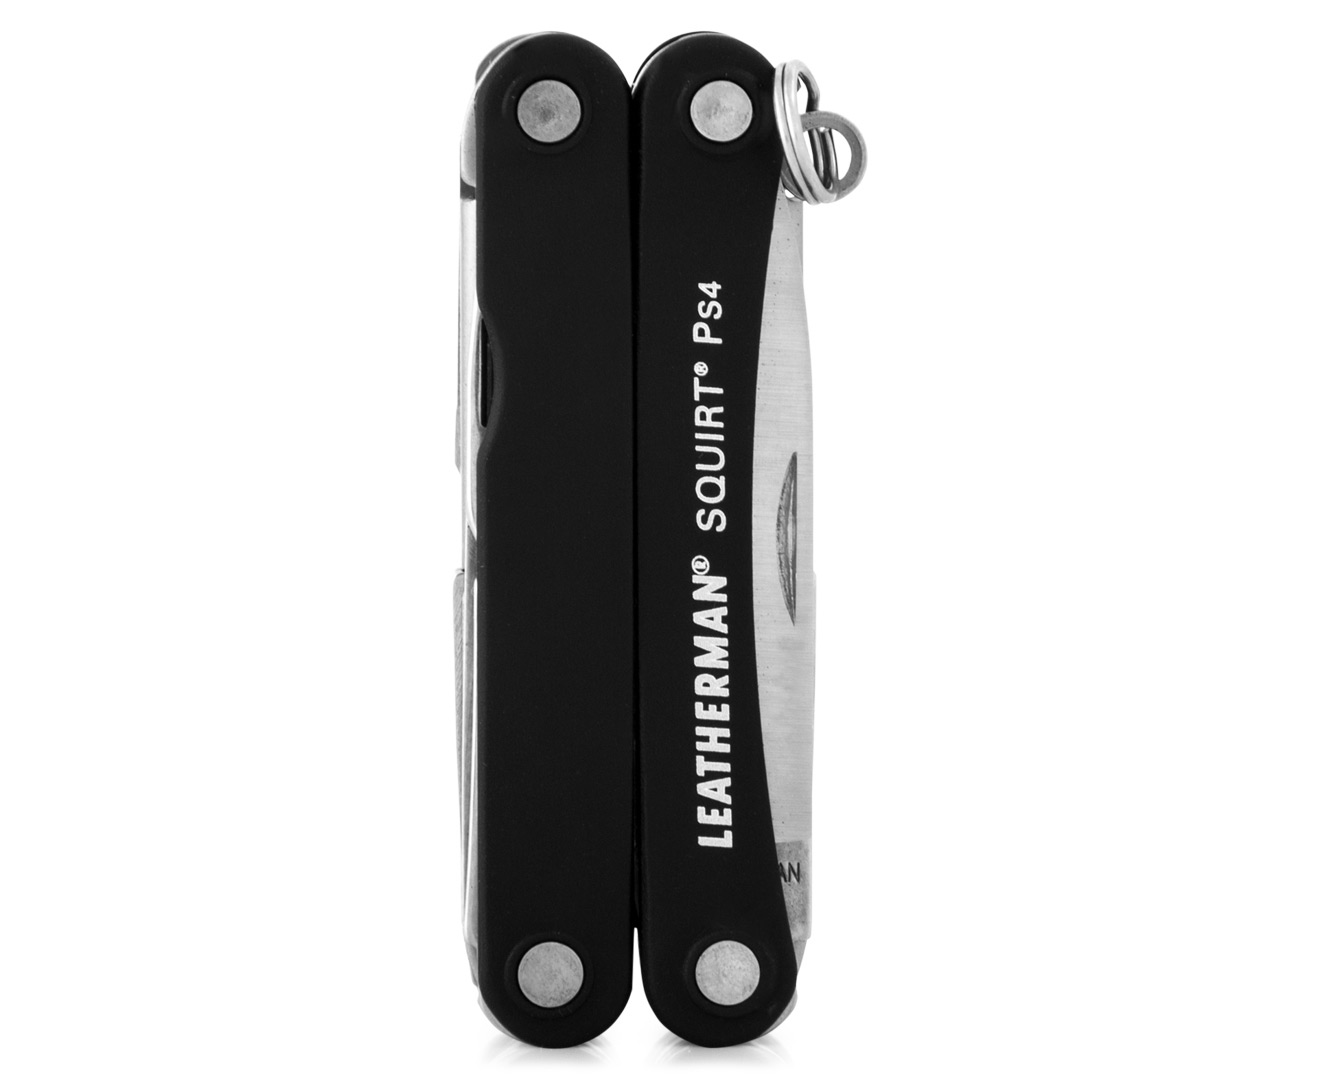 leatherman 831195 squirt ps4 black keychain multi tool